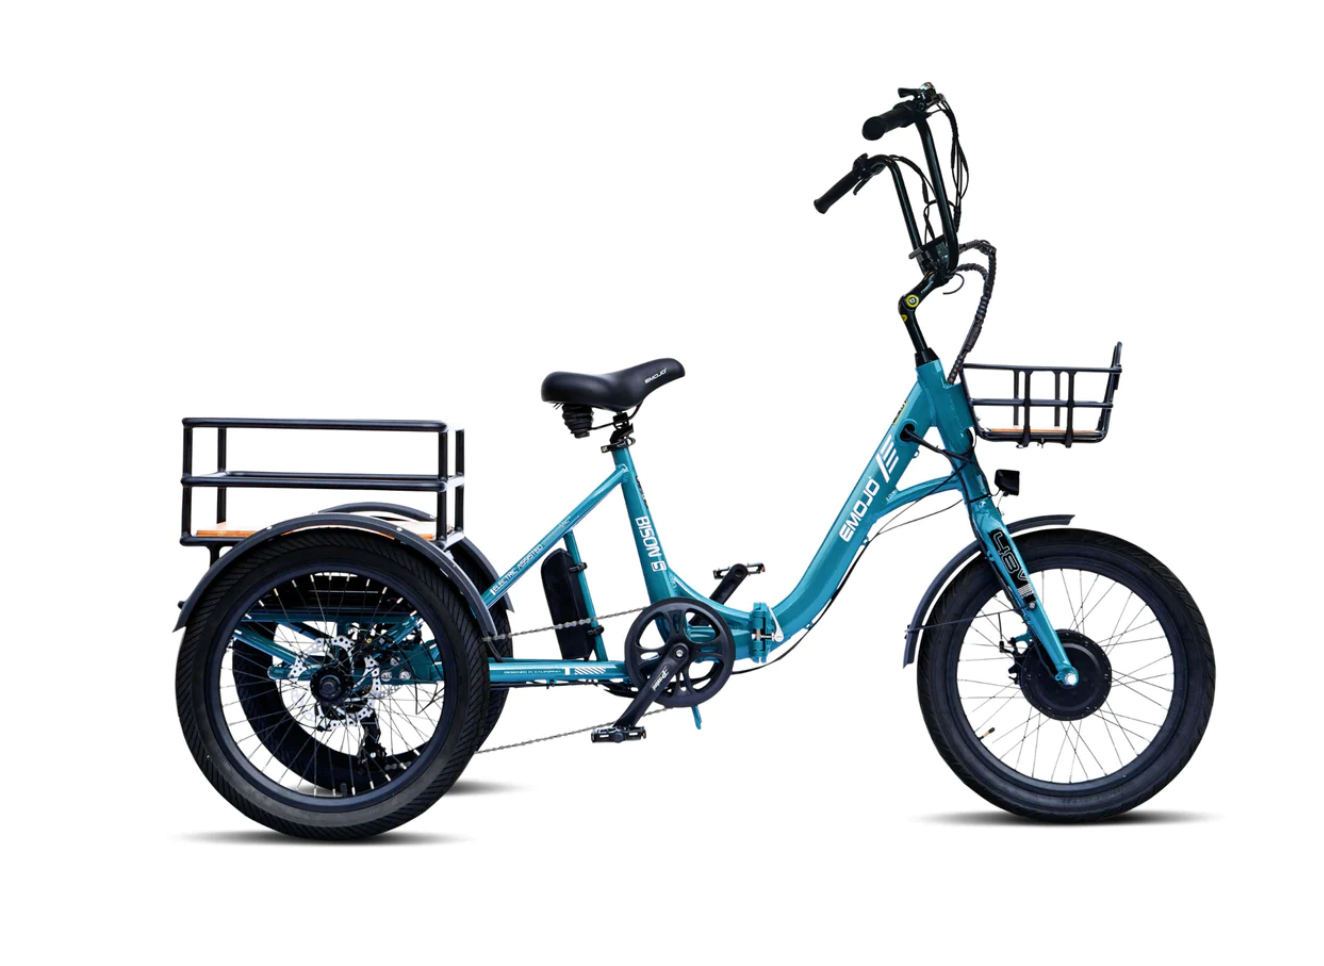 Emojo Bison S Folding Electric Trike Bike